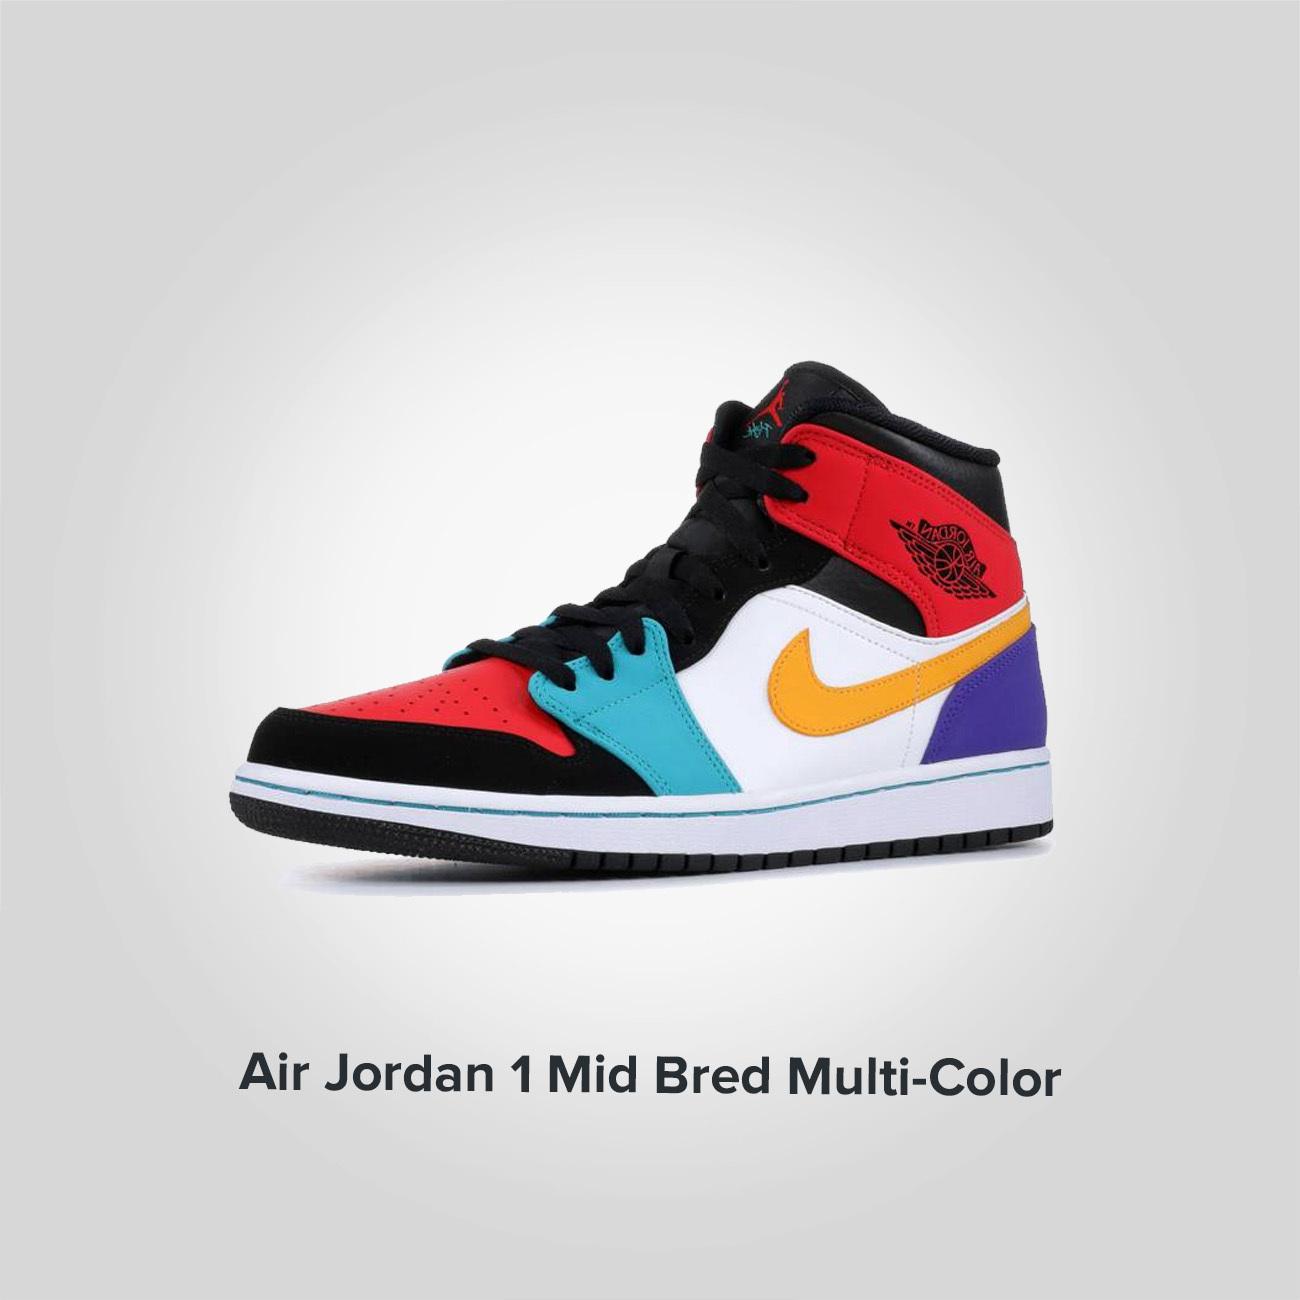 Jordan 1 Mid Bred Multi-Color